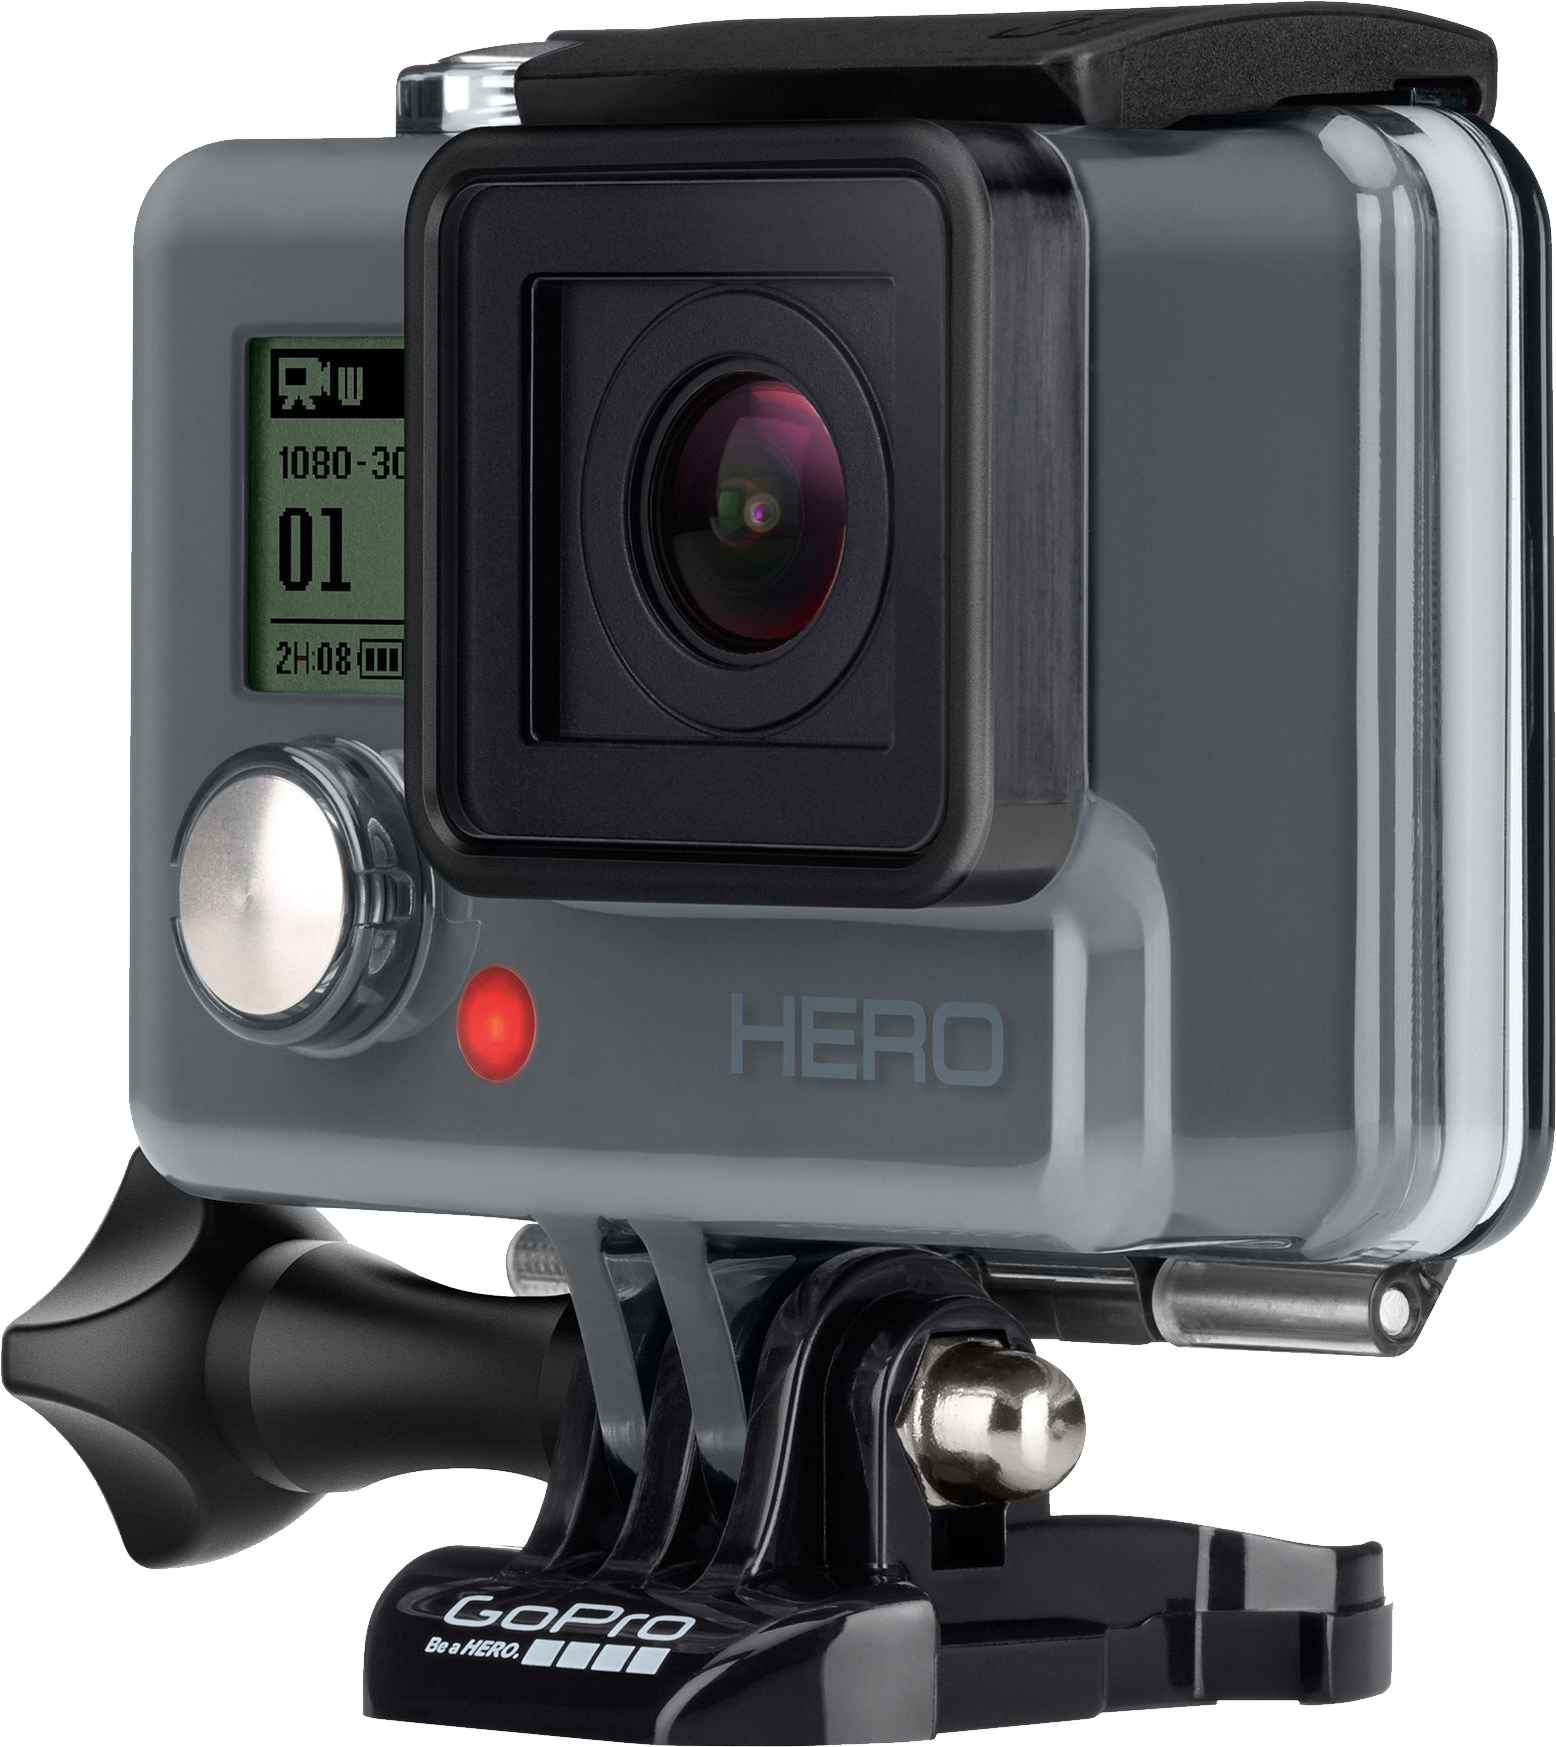 Gopro Hero Camera Png - Gopro, Transparent background PNG HD thumbnail